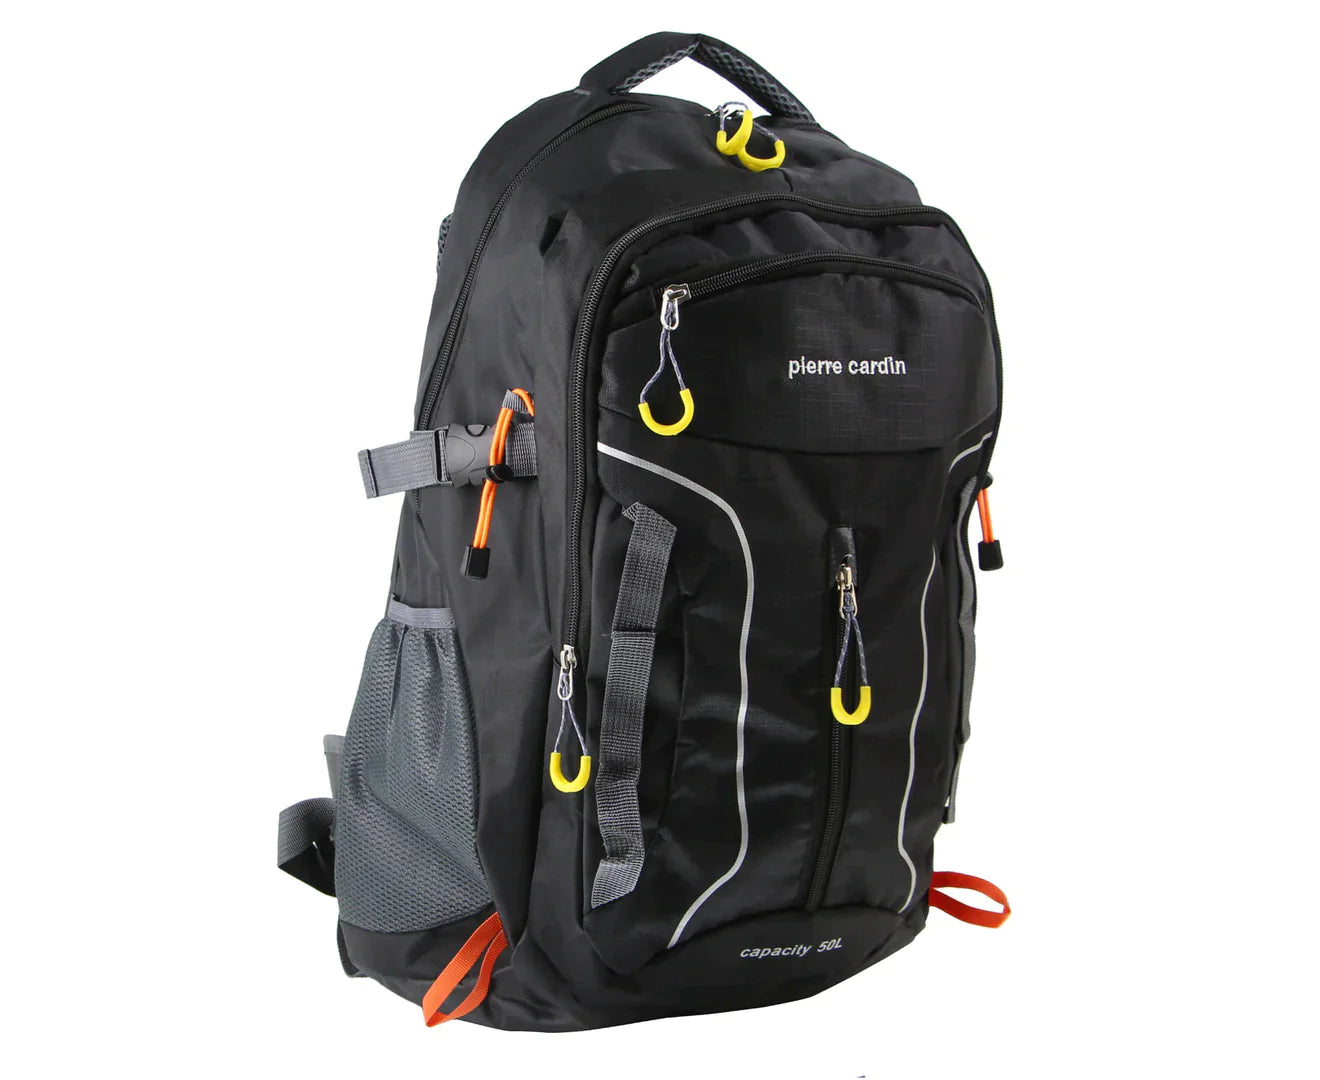 Pierre Cardin Adventure Backpack - Black - 50L